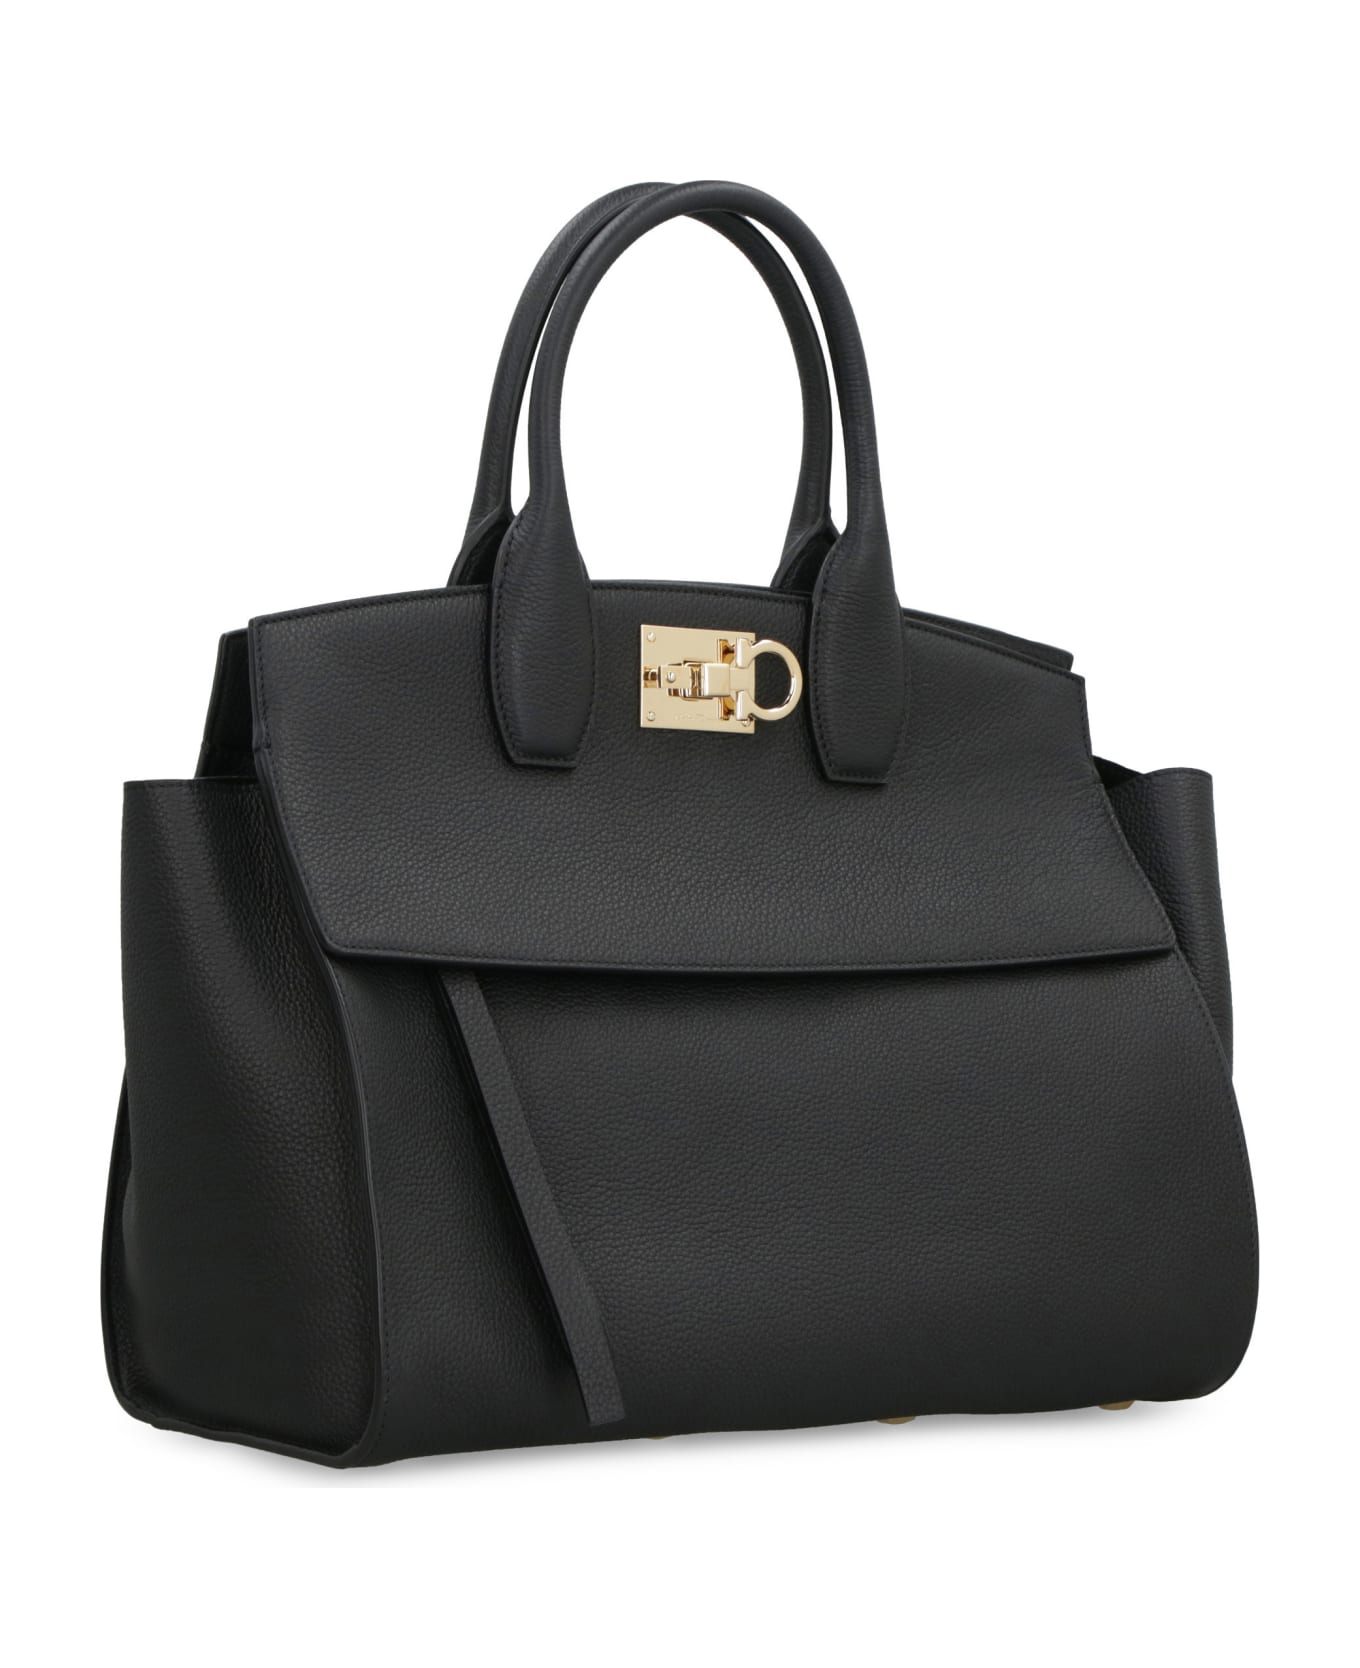 Ferragamo Studio Soft Leather Handbag - black トートバッグ